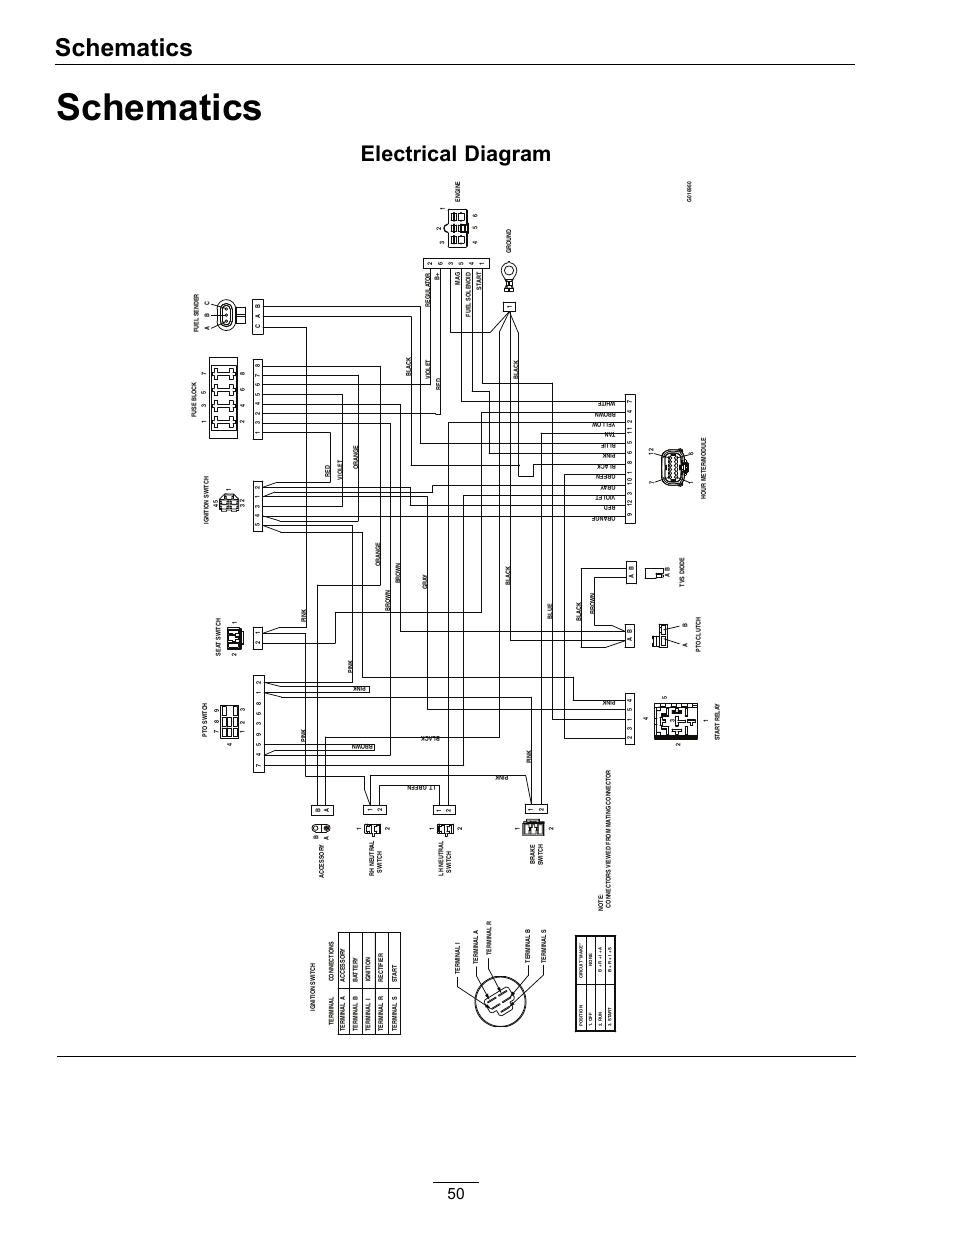 grindex wiring diagram